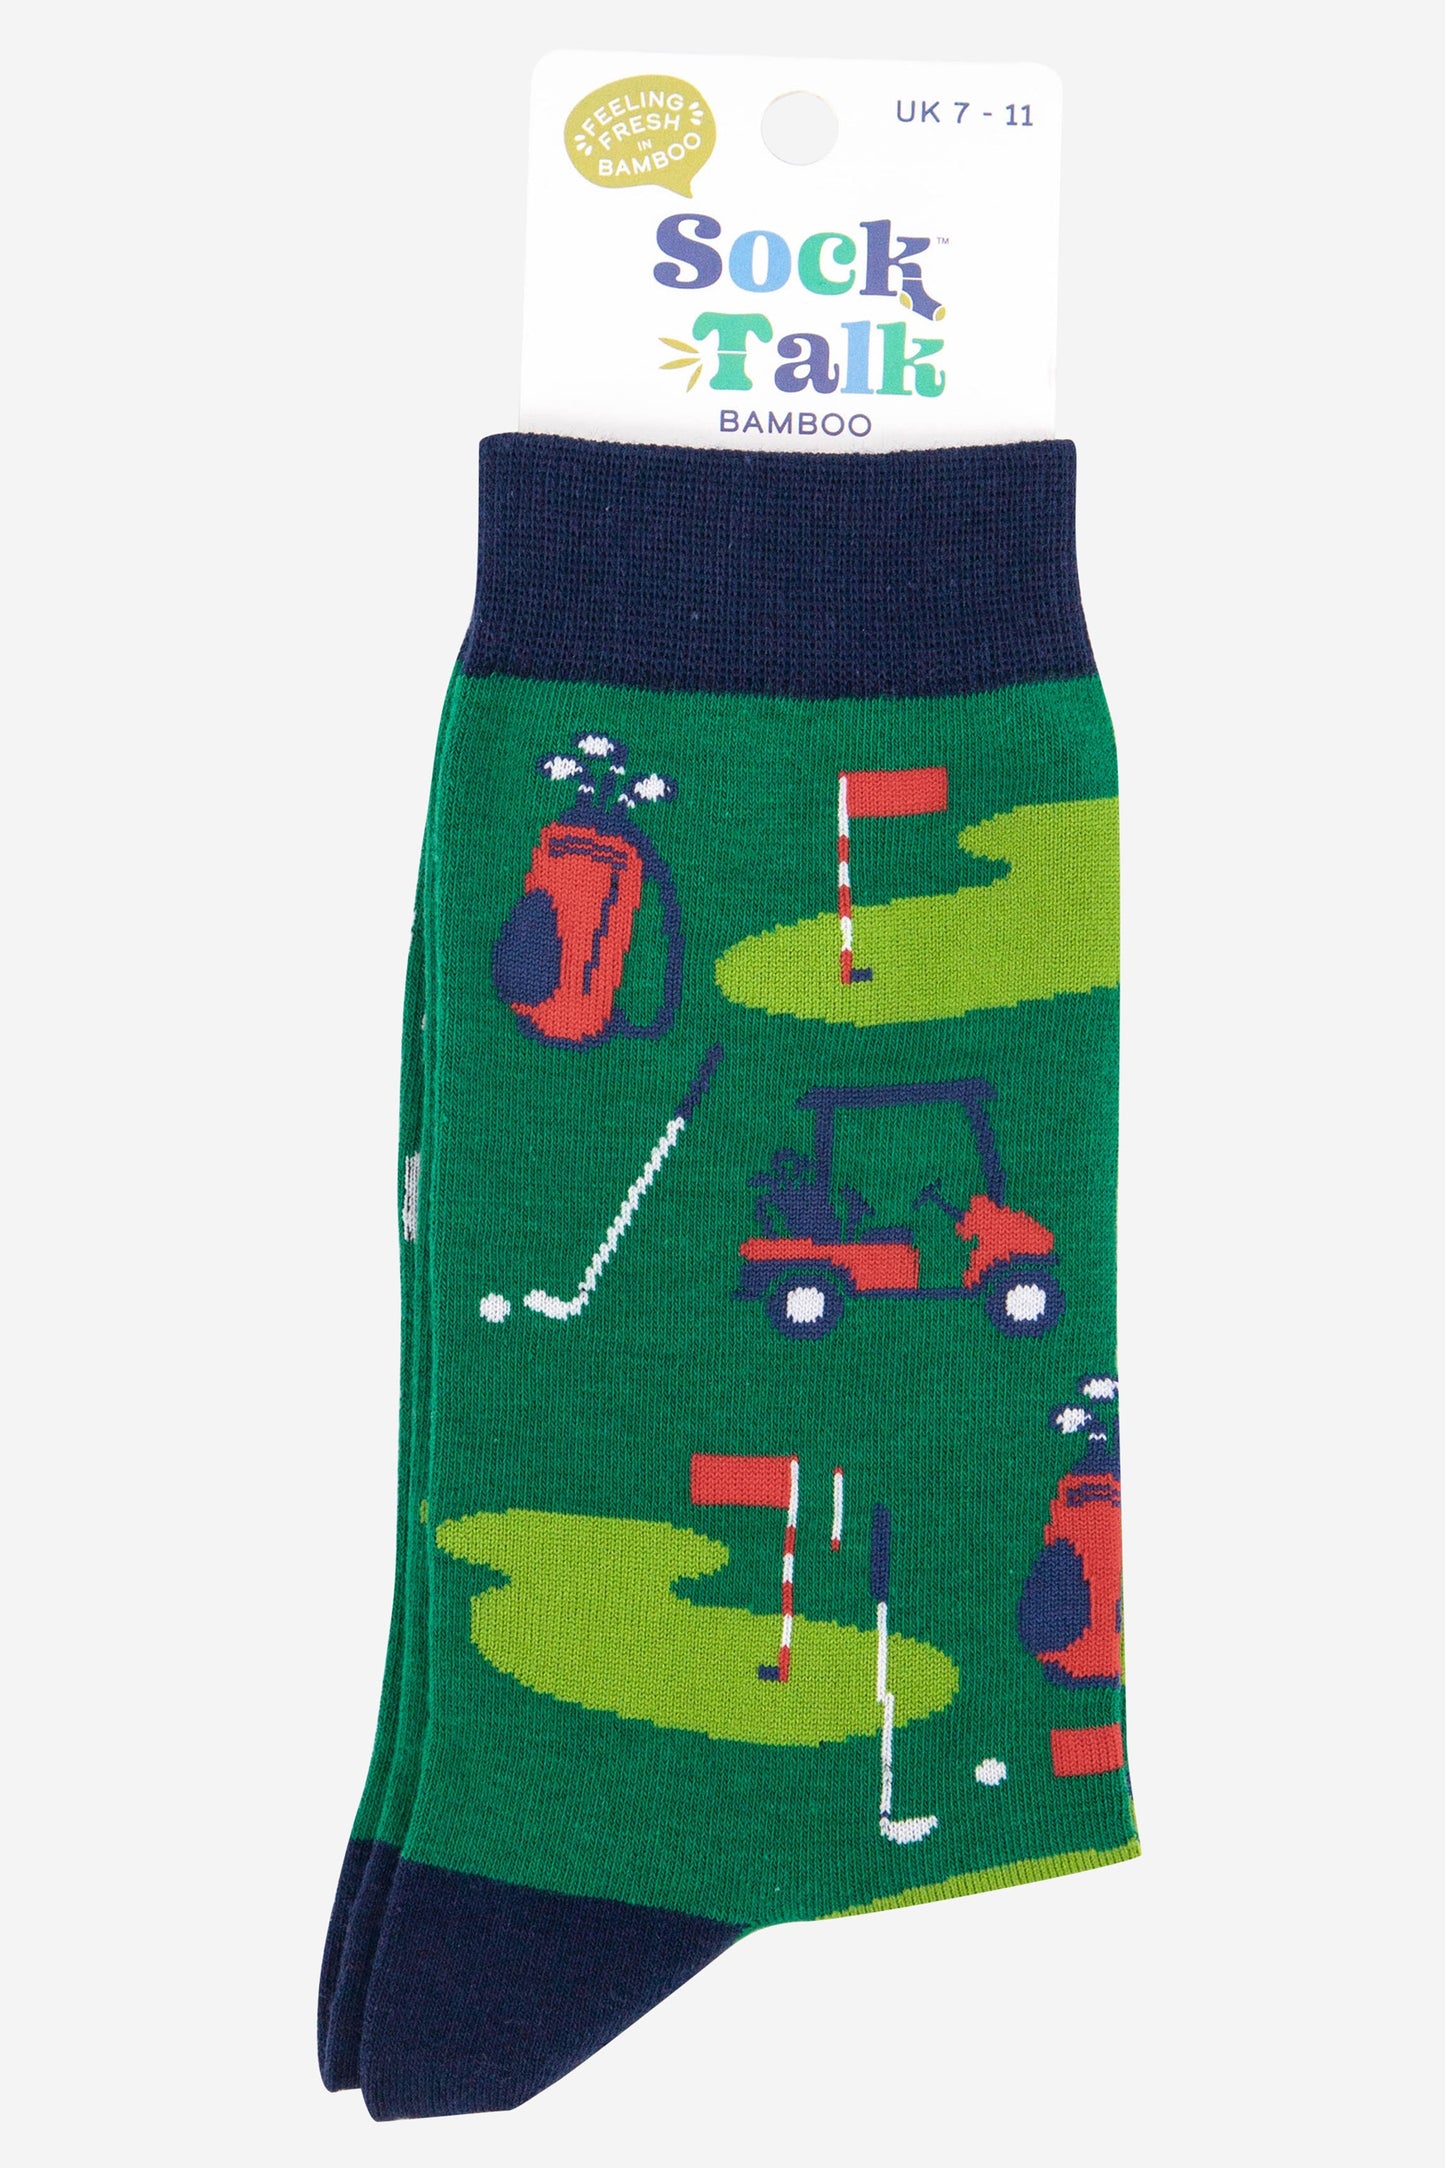 mens bamboo golf socks putting green scene uk size 7-11